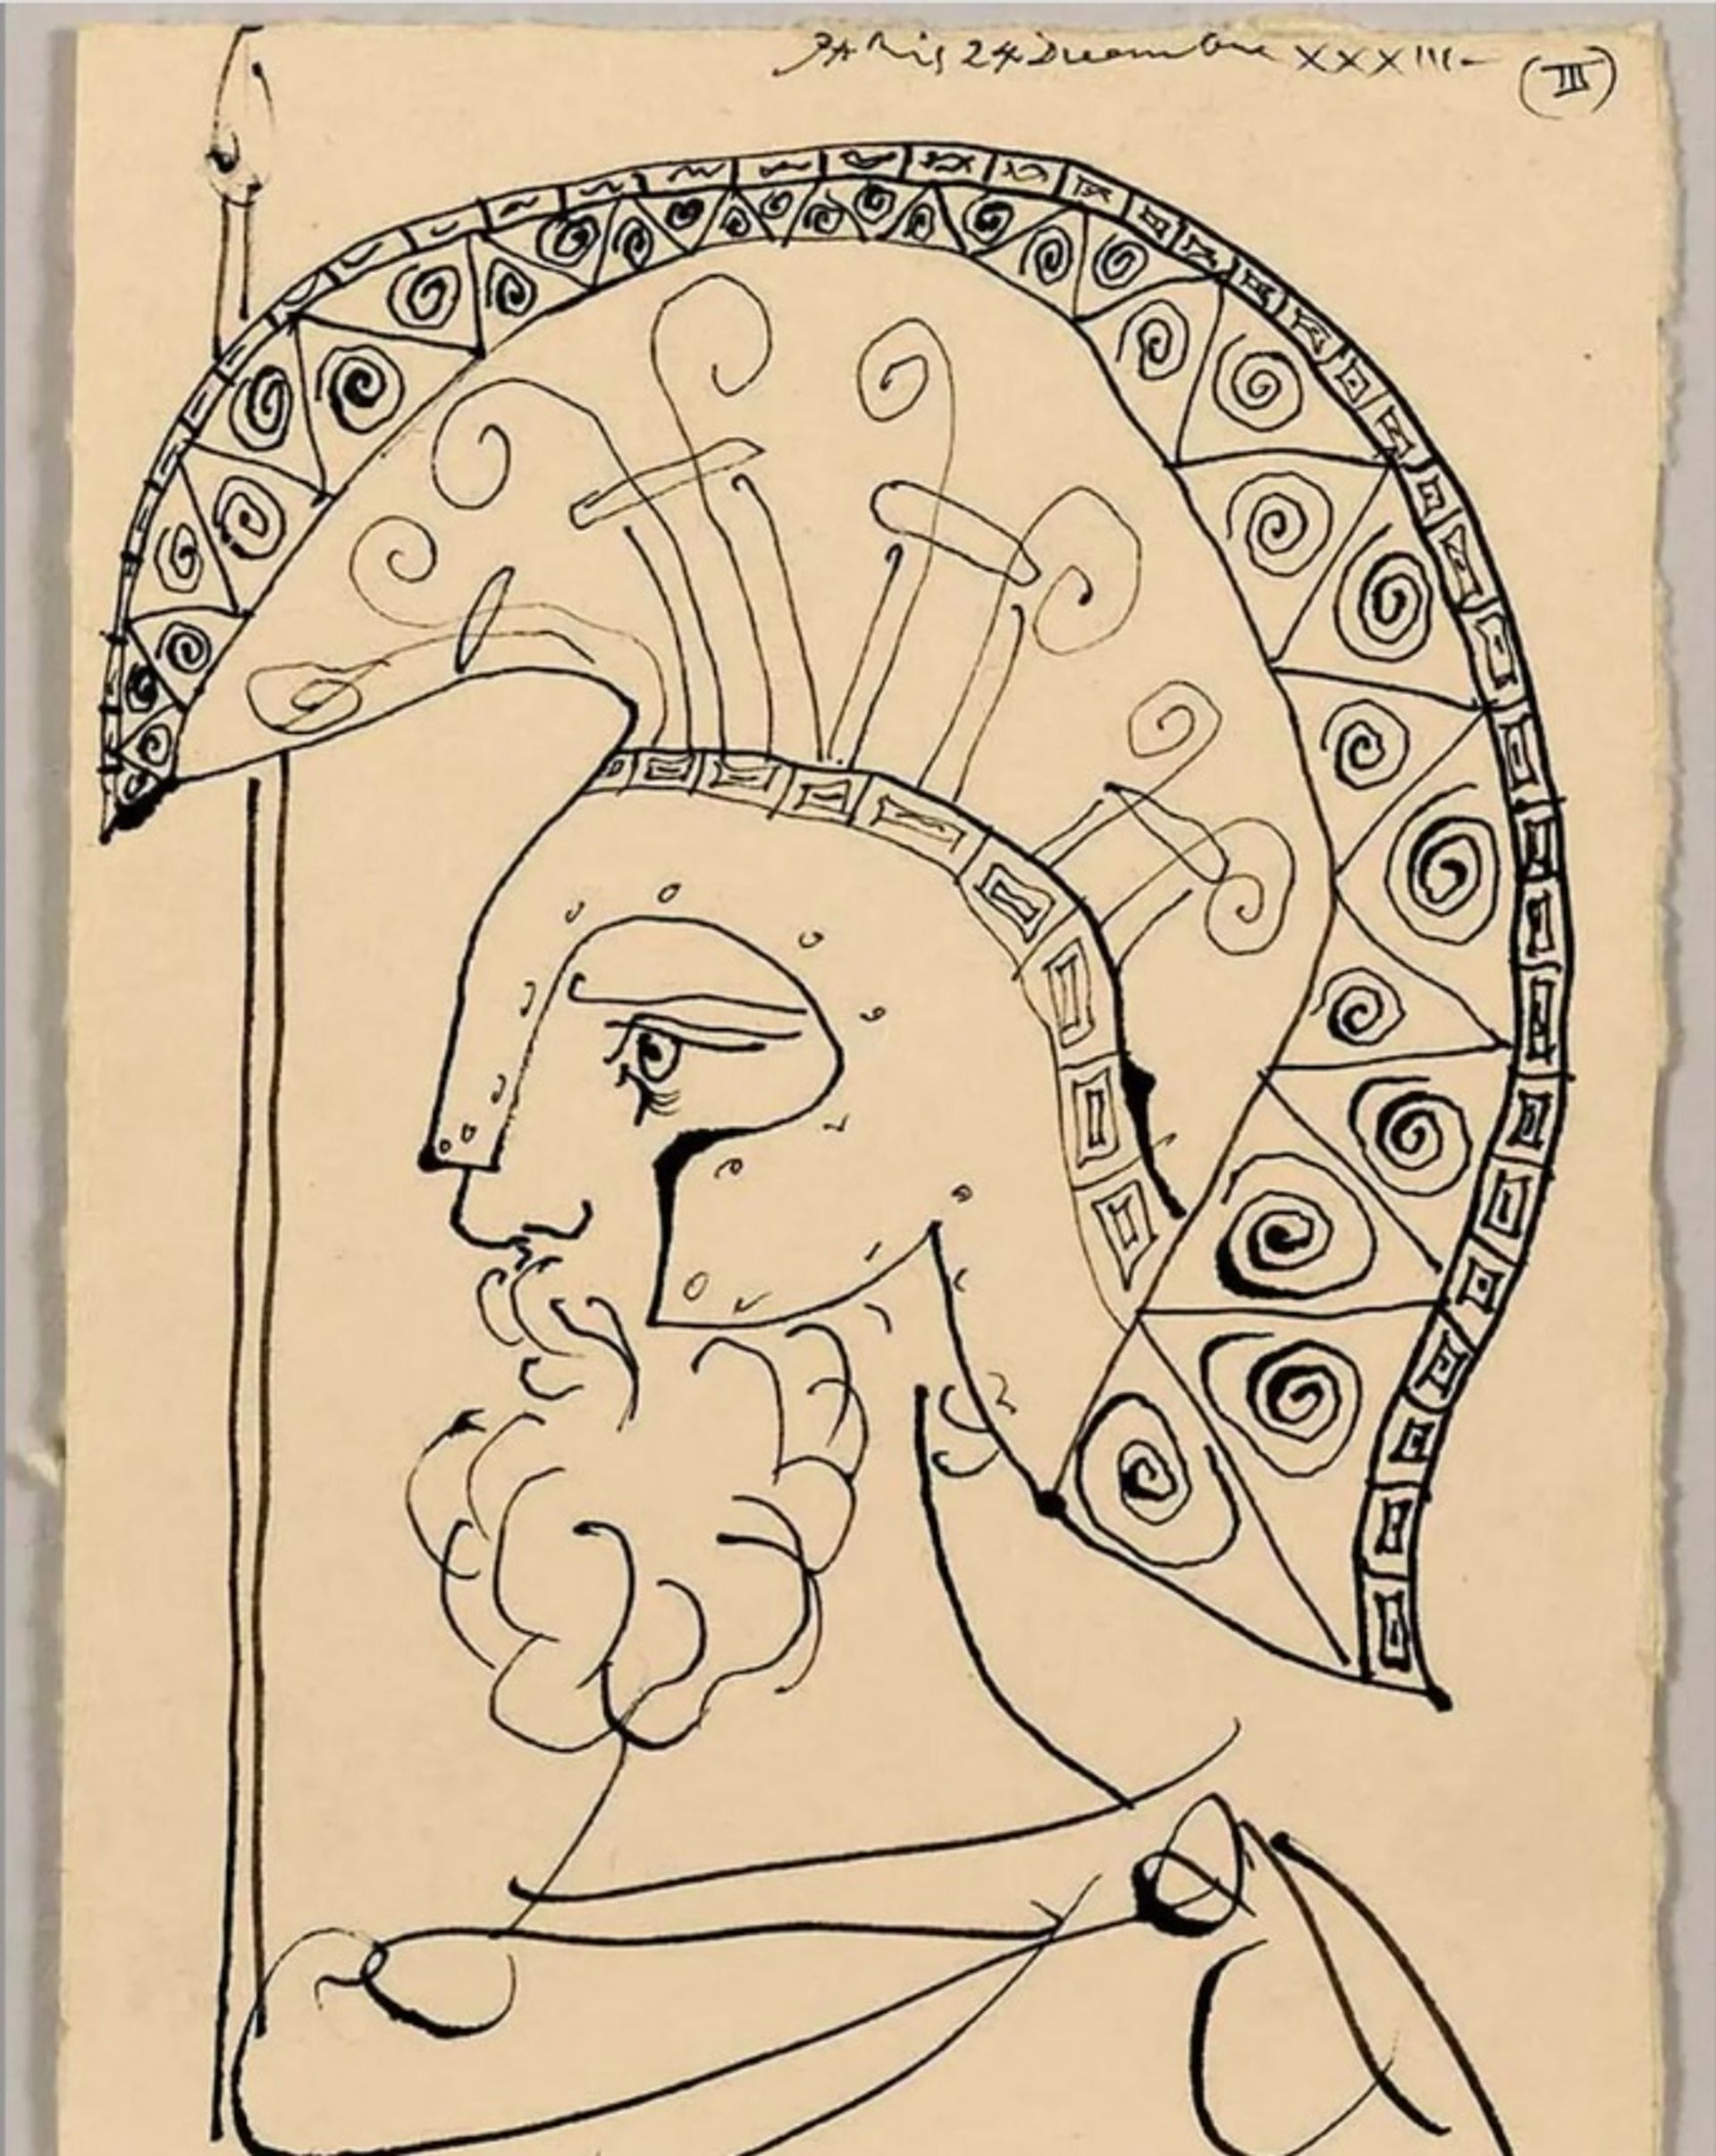 Study for Lysistrata (1933) של פיקאסו הוחזר מרשותם של אן והרברט פפר

© Succession Picasso